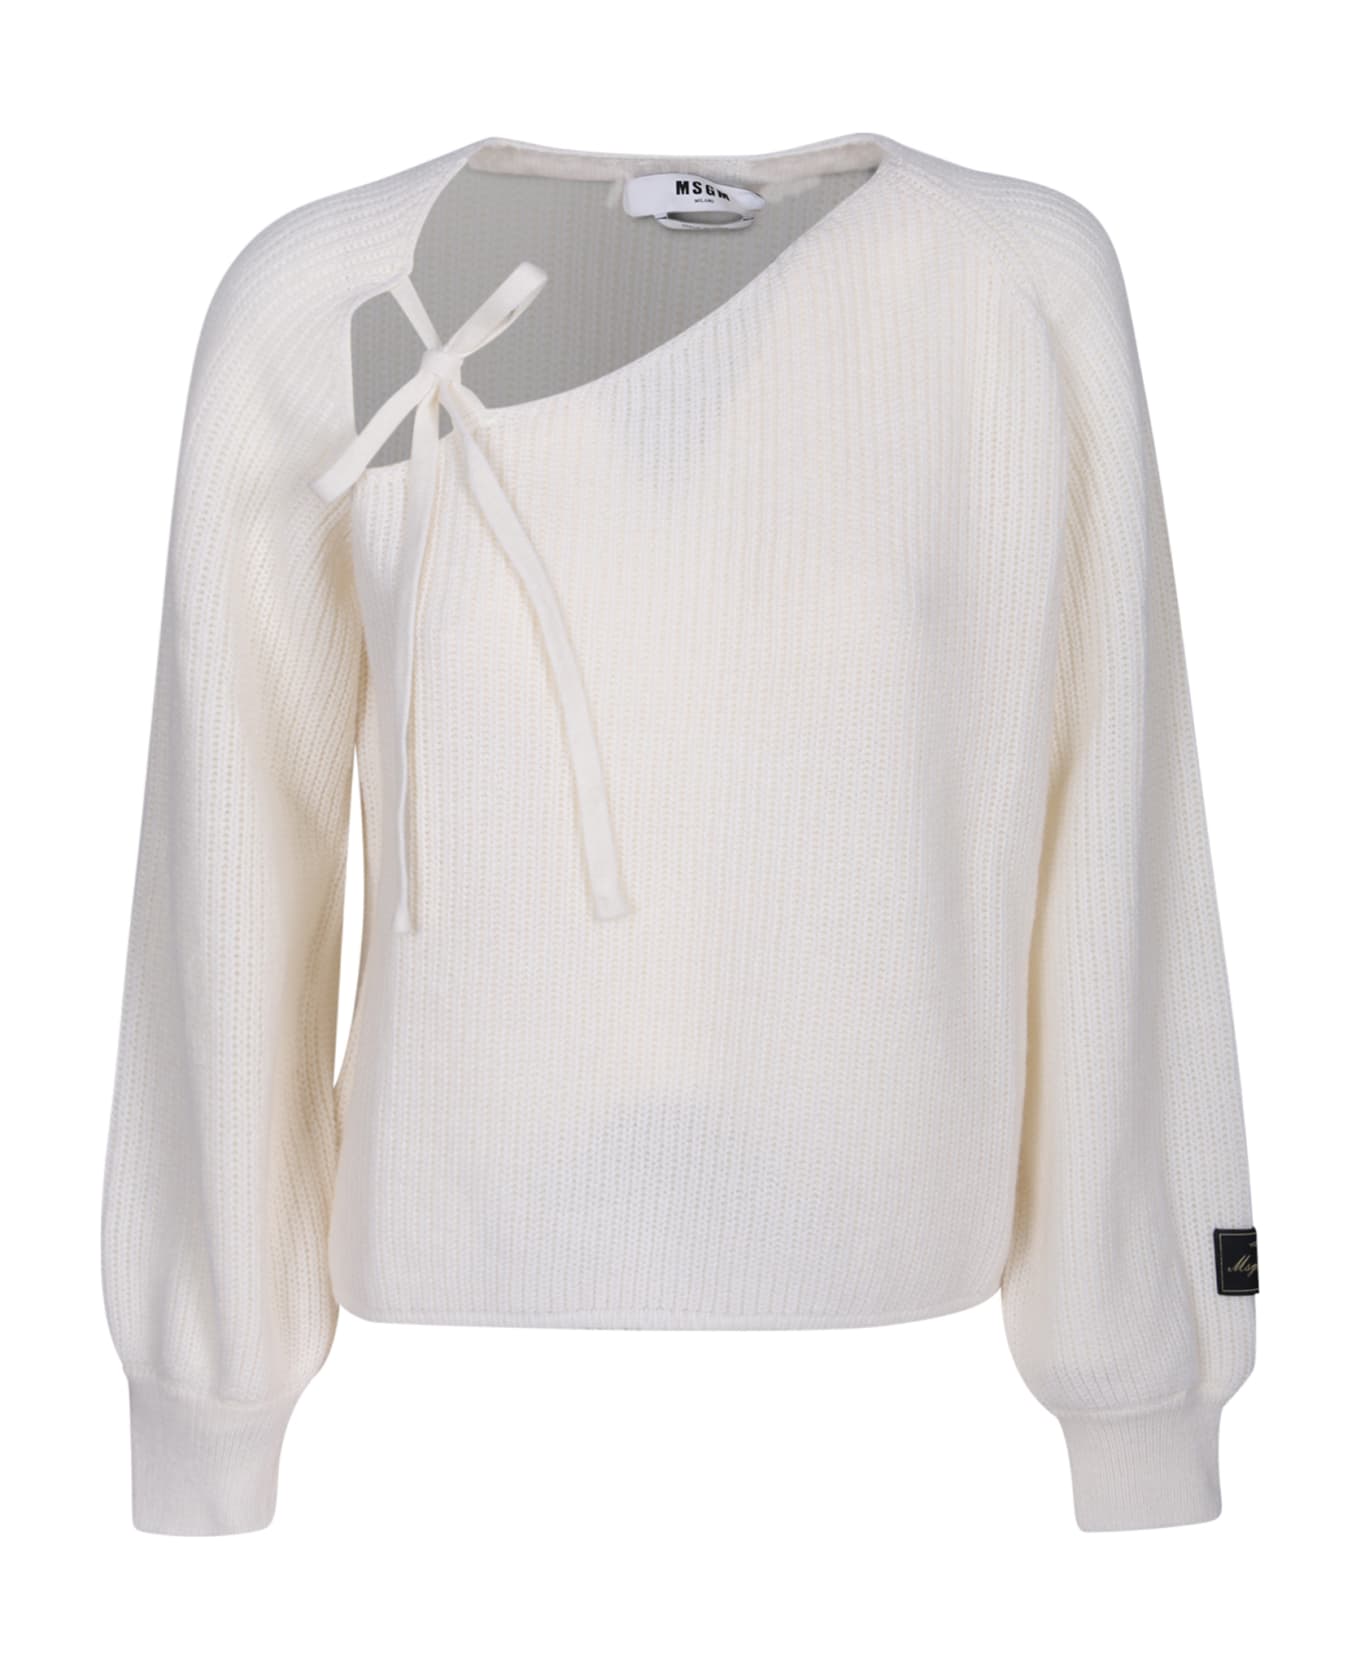 MSGM Knot Detail White Sweater - White